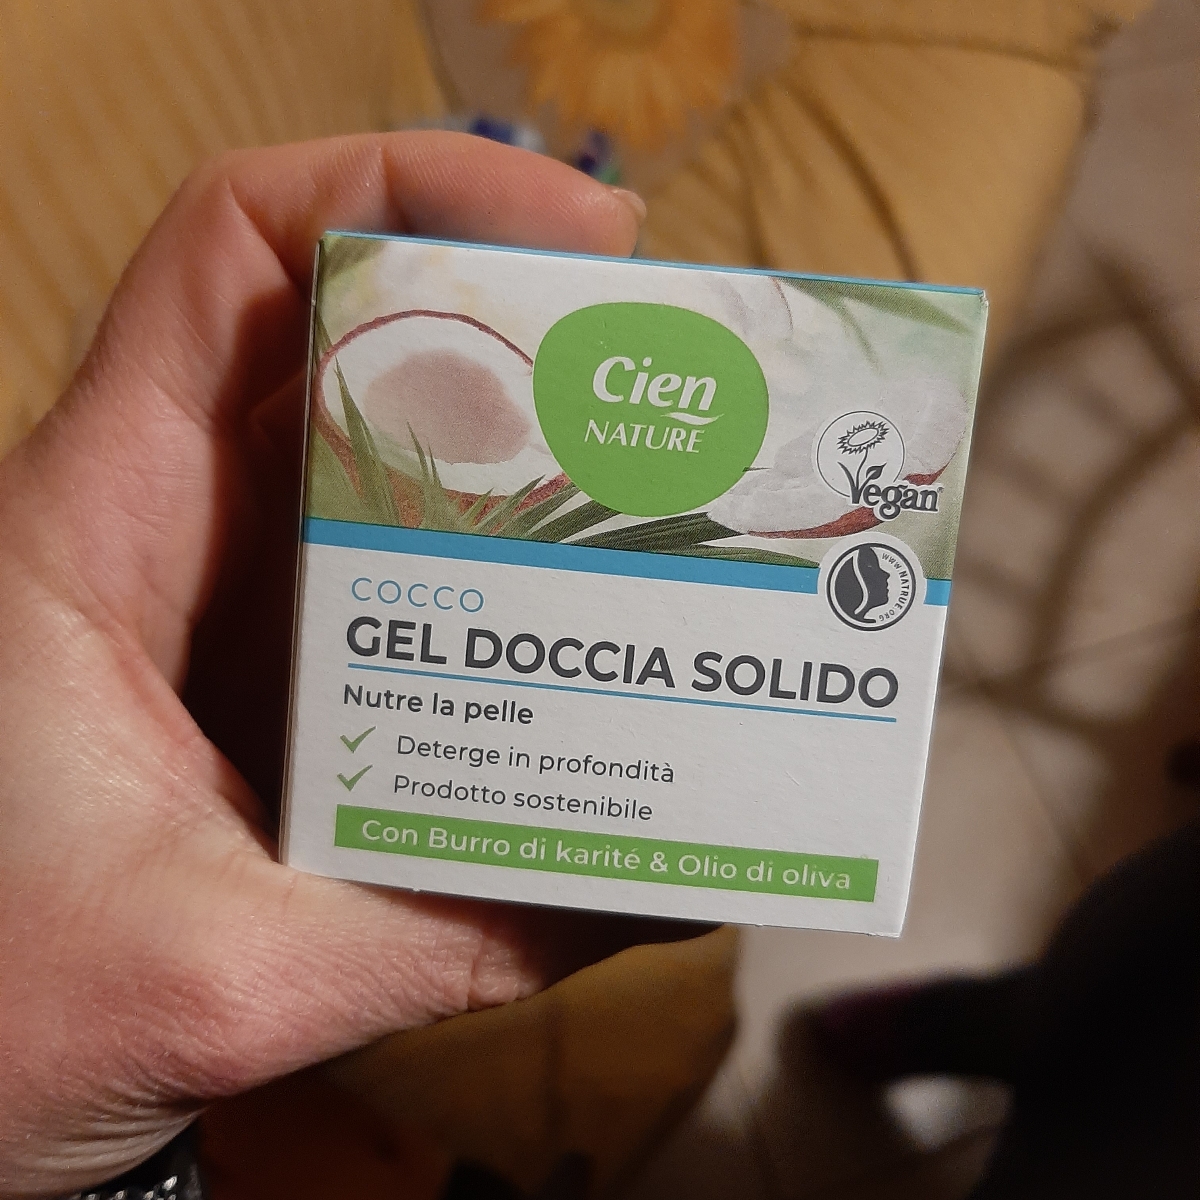 Cien nature Gel Doccia Solido Cocco Reviews | abillion